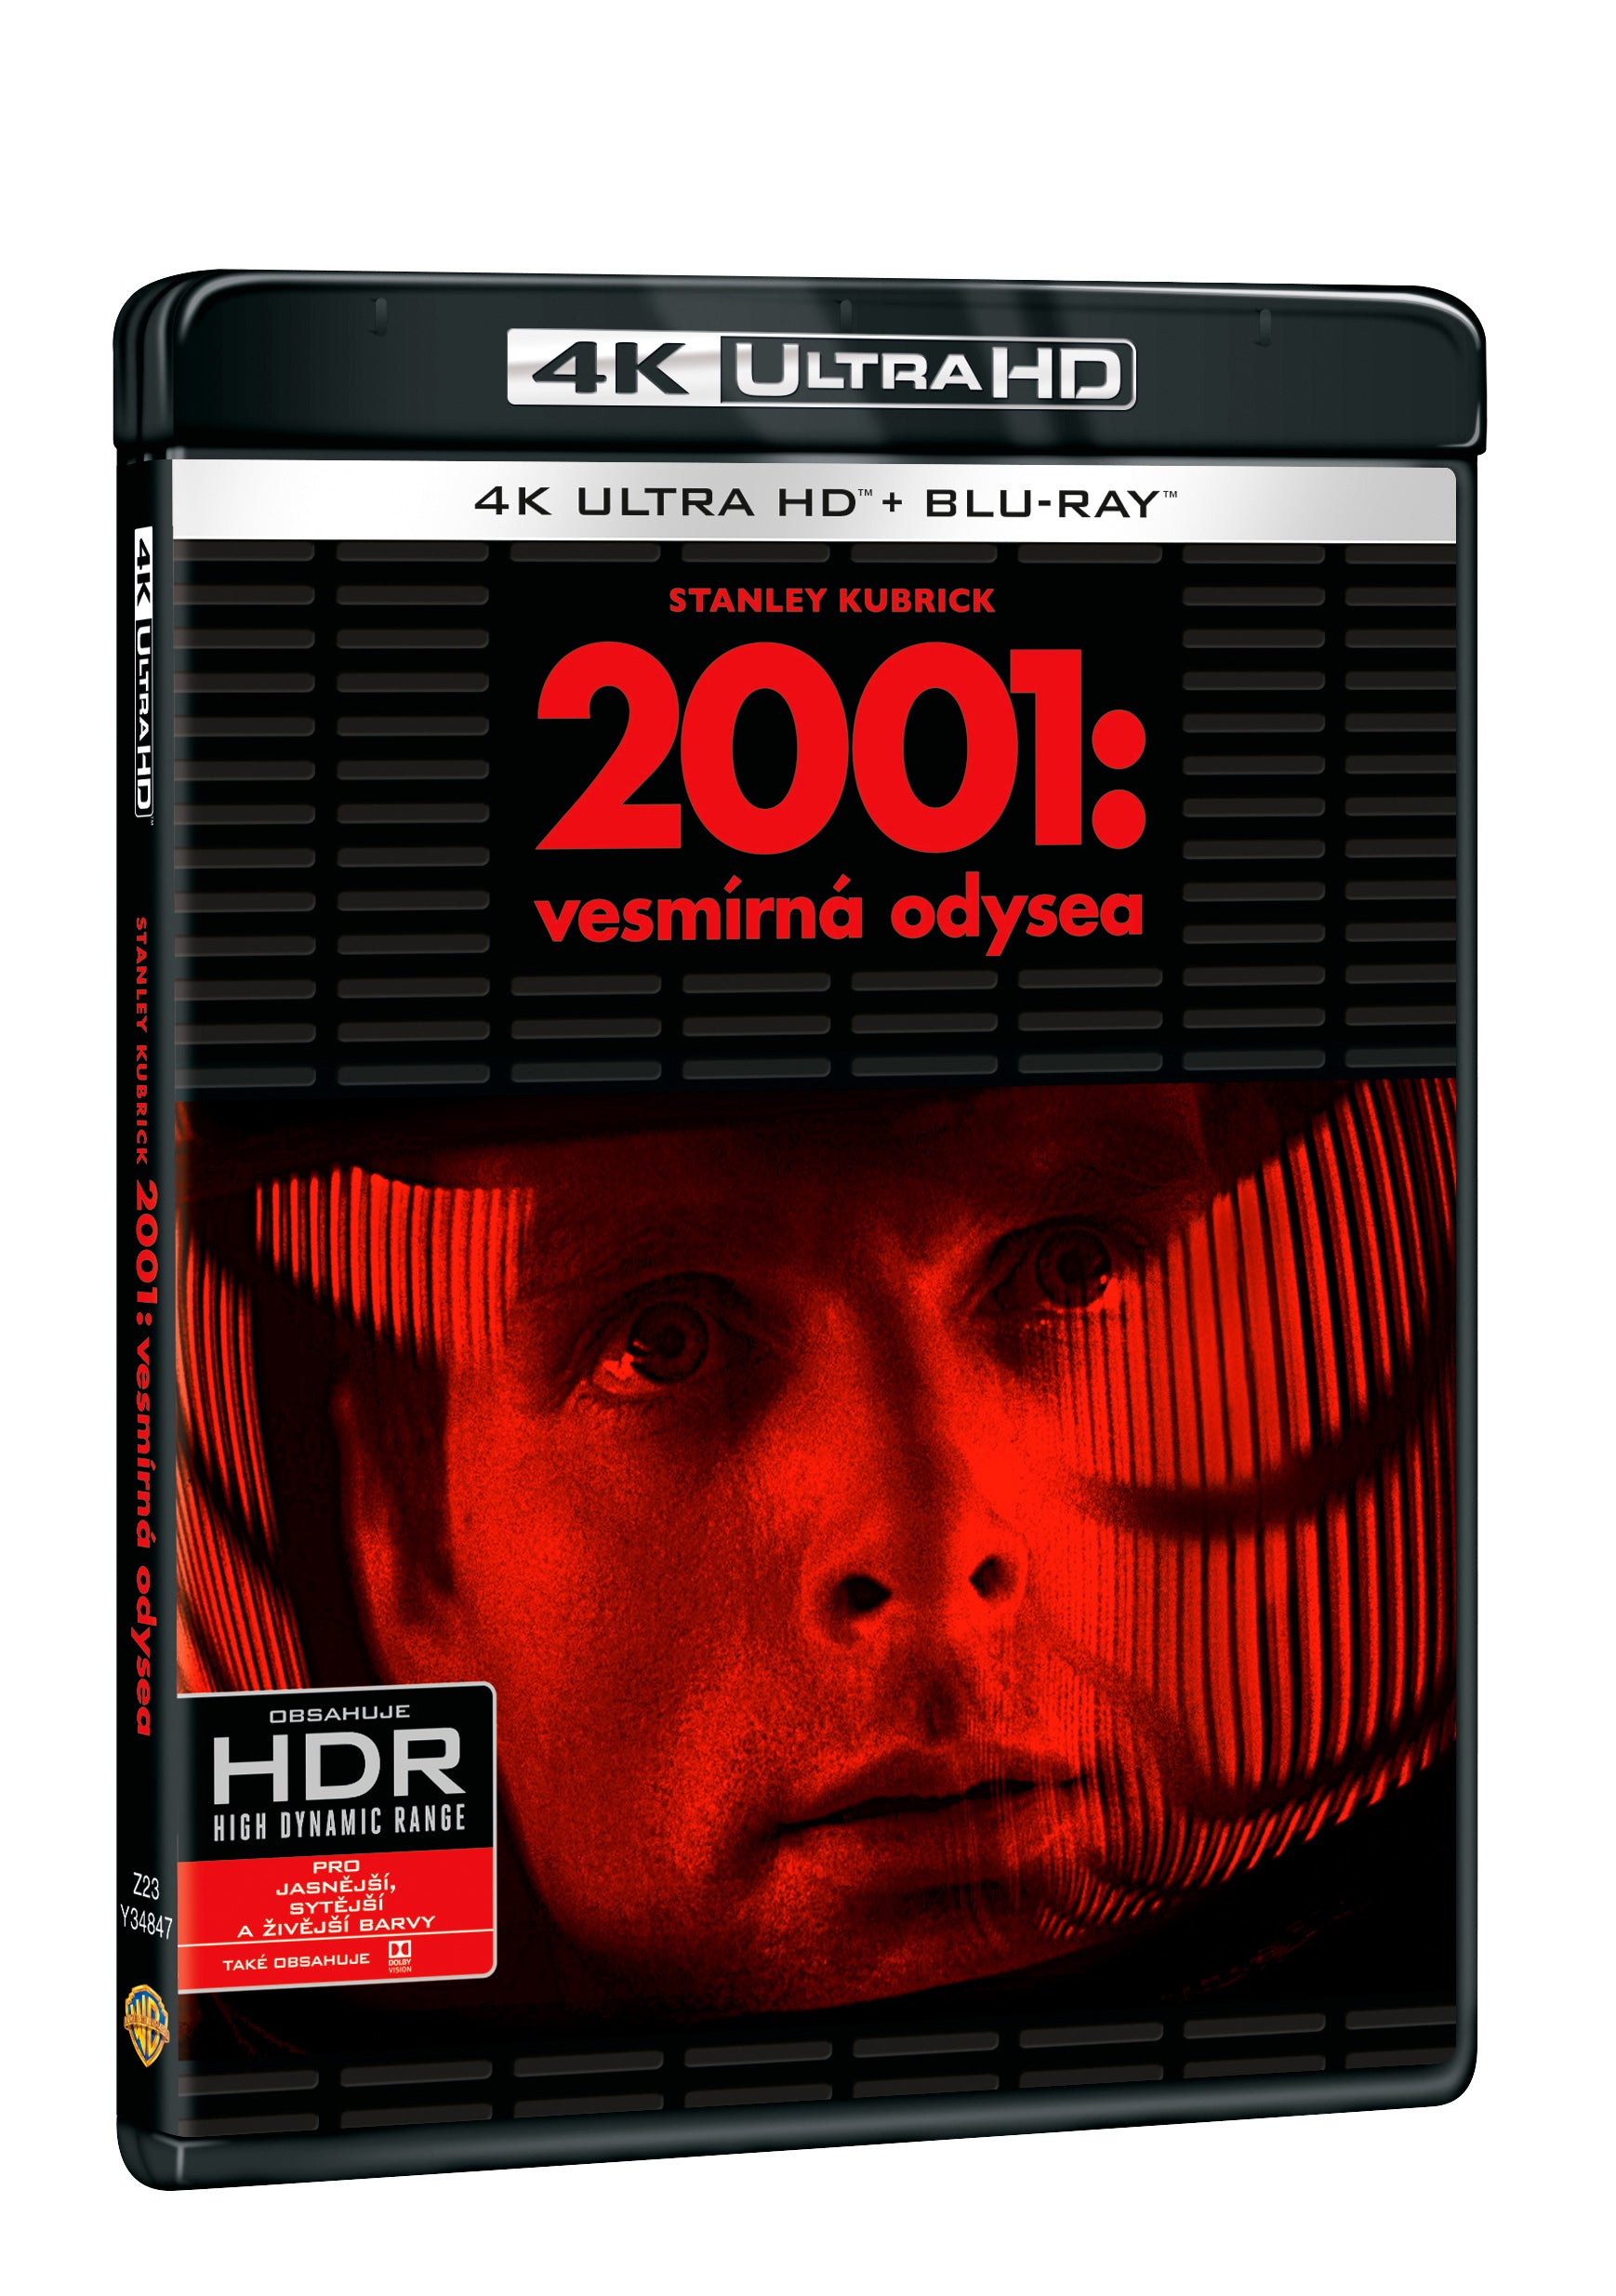 2001: Vesmirna odysea 3BD (UHD+BD+bonus disk) / 2001: A Space Odyssey - Czech version